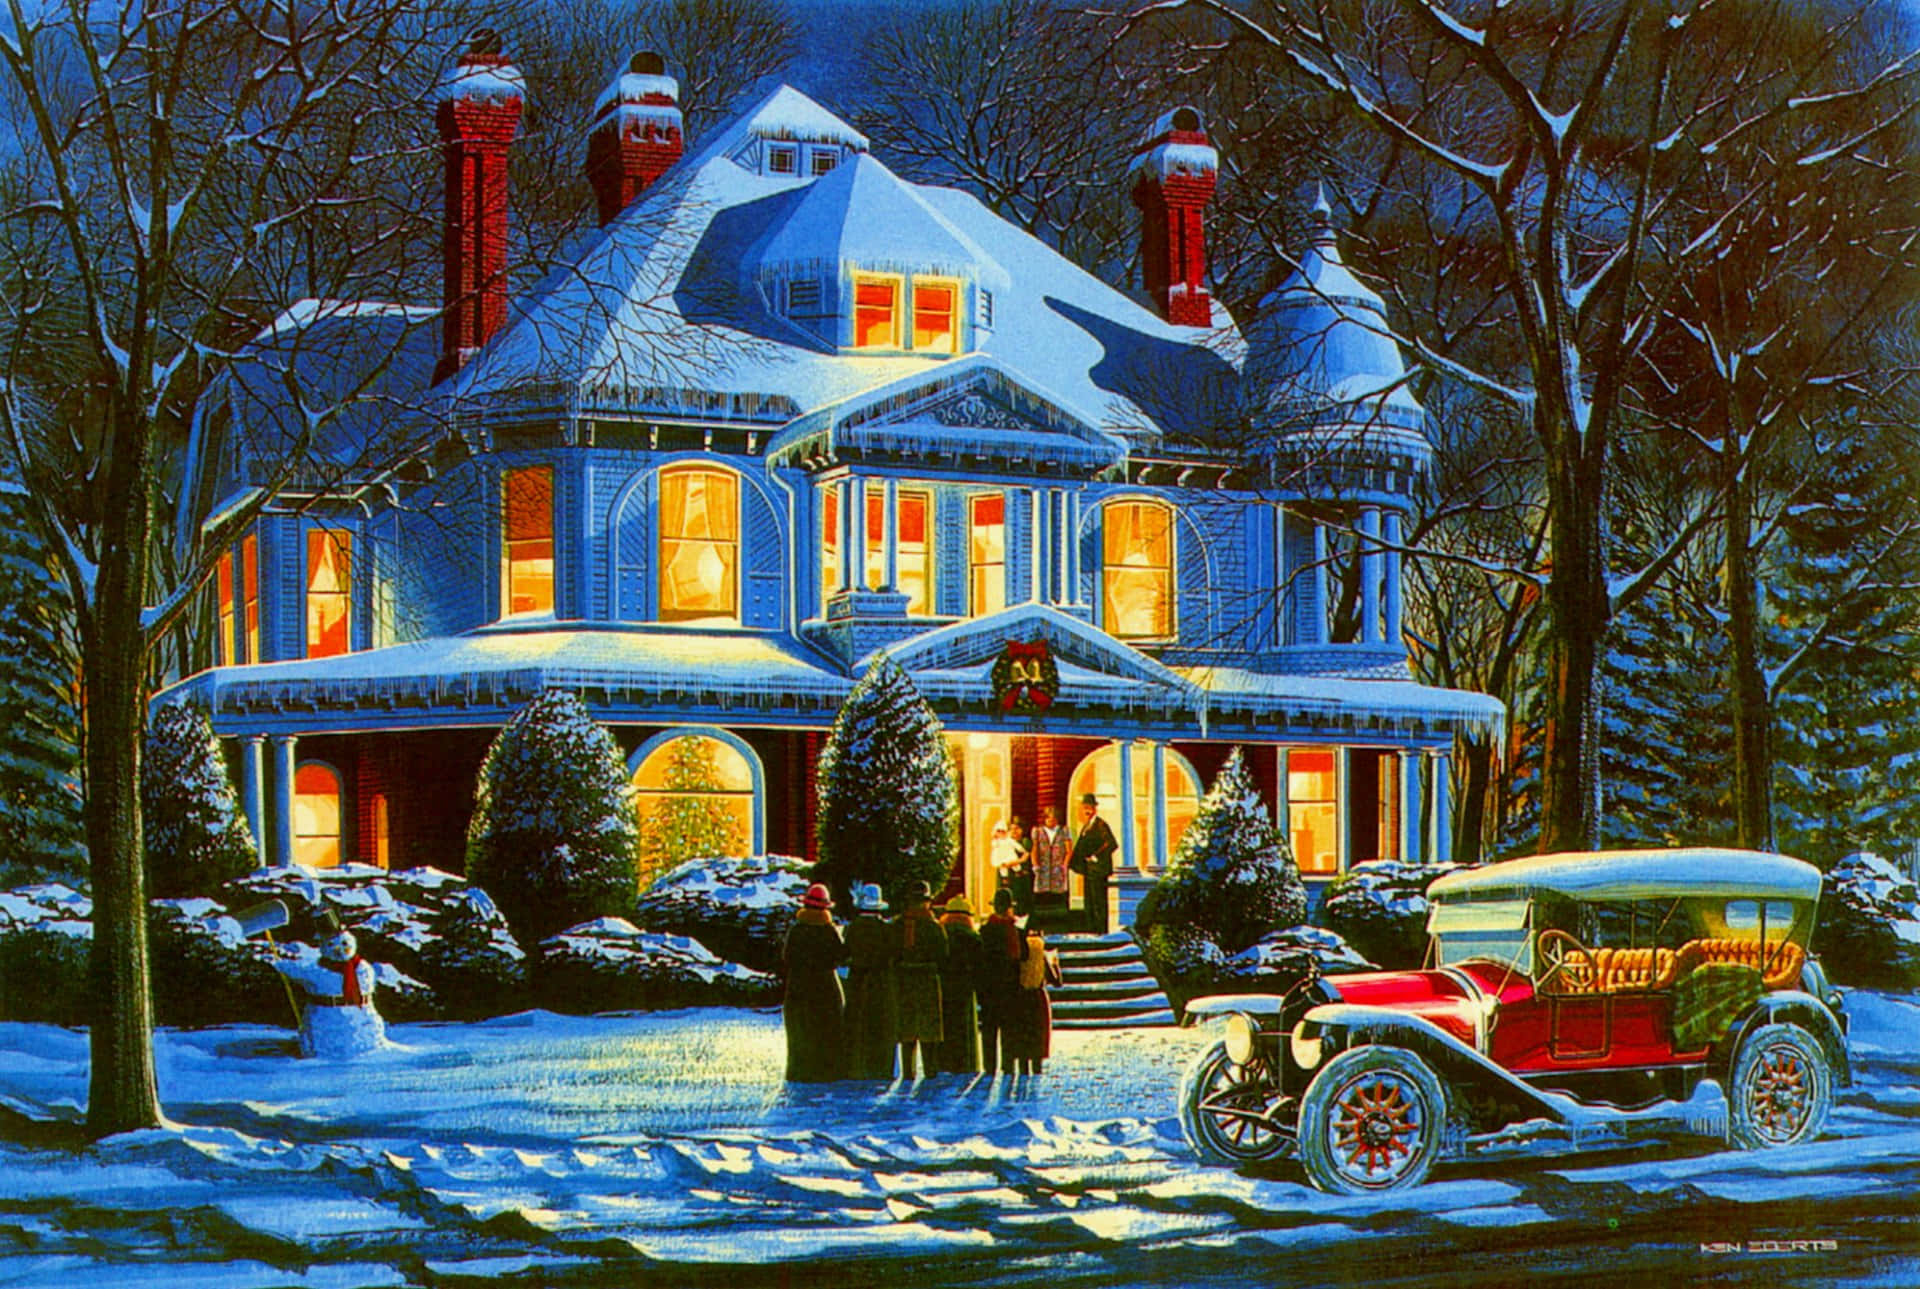 A heartwarming Vintage Christmas scene